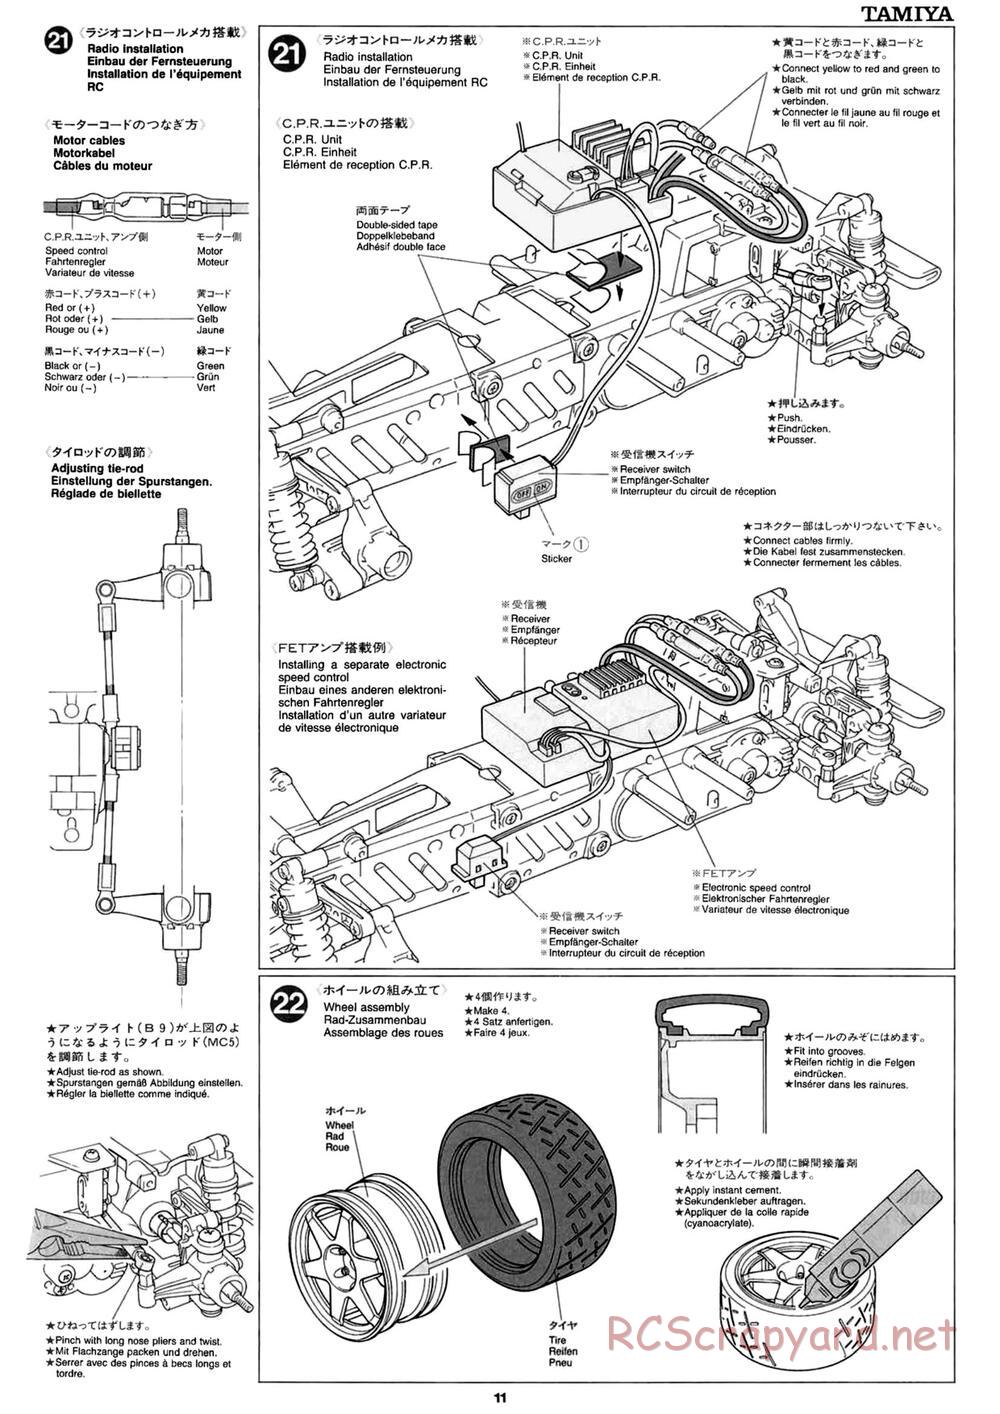 Tamiya - FF-02 Chassis - Manual - Page 11